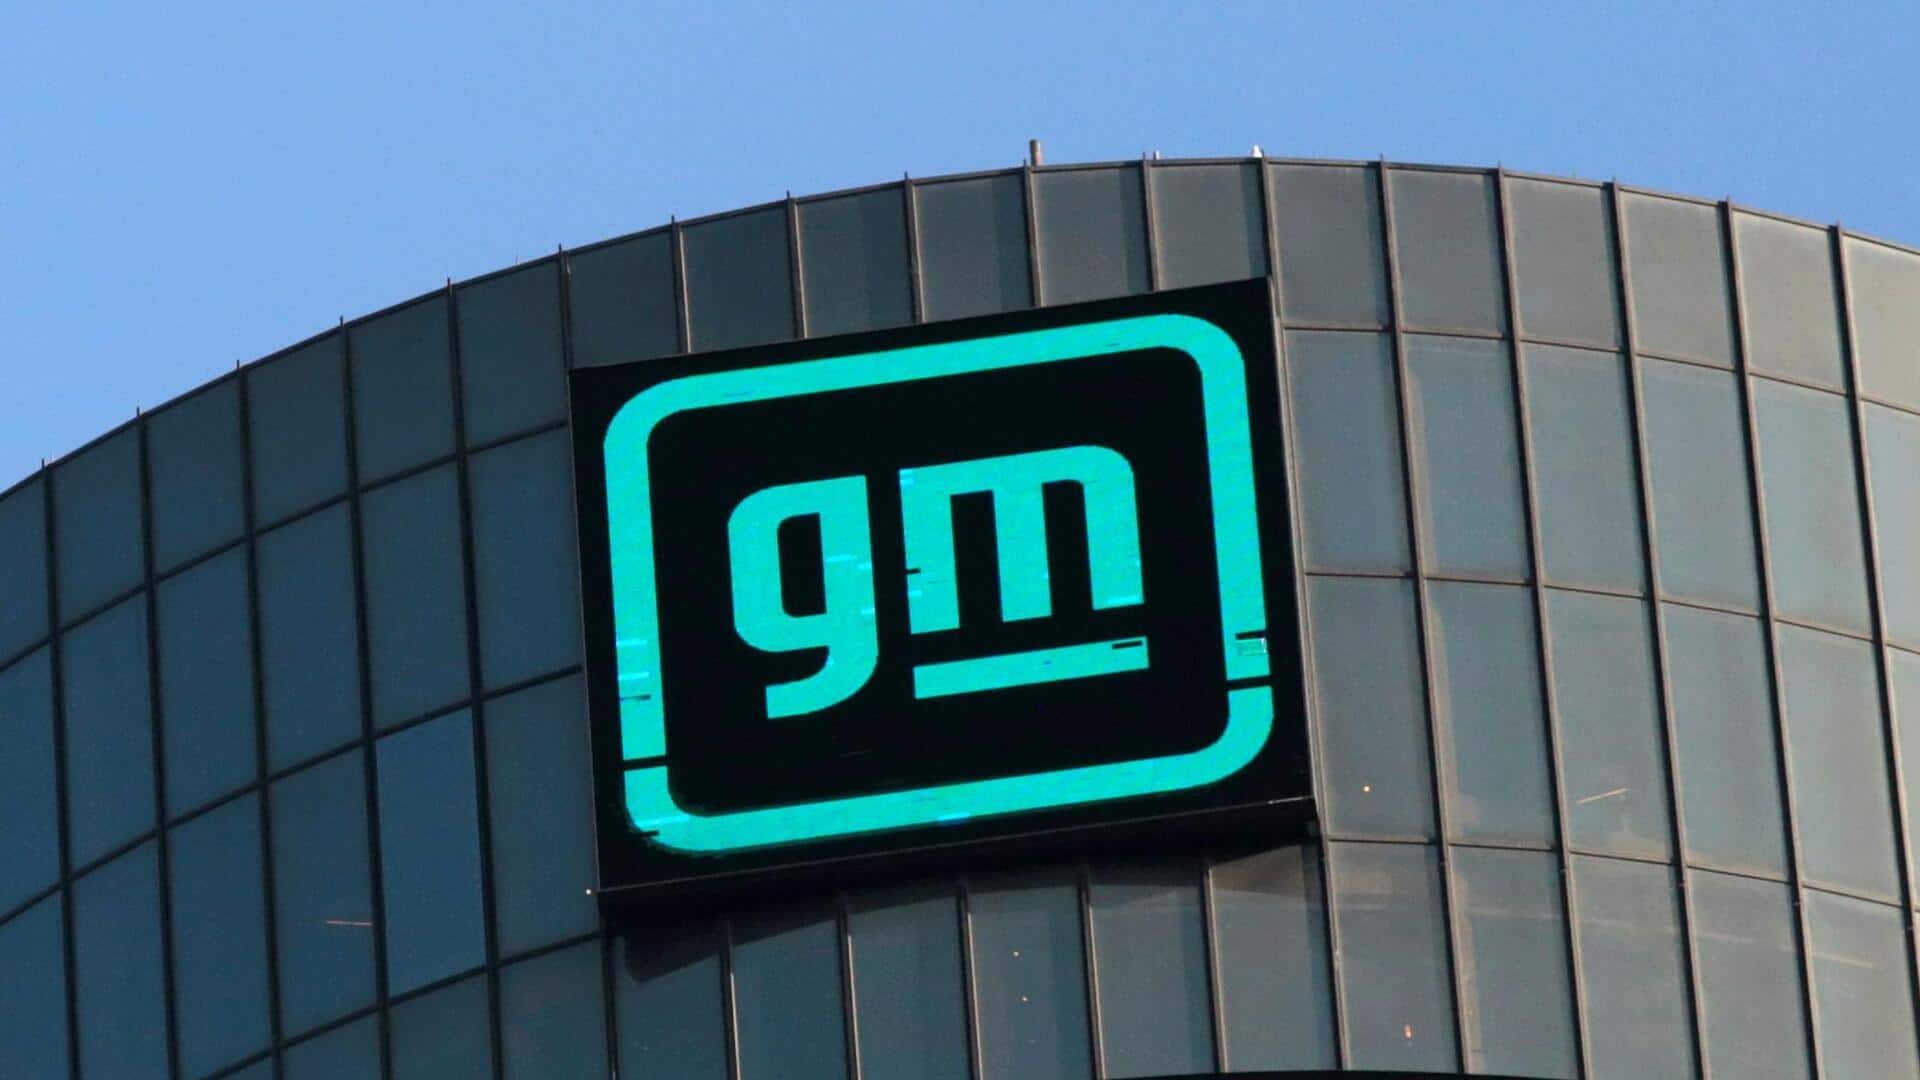 General Motors reaches tentative agreement with UAW, ending 6-week strike